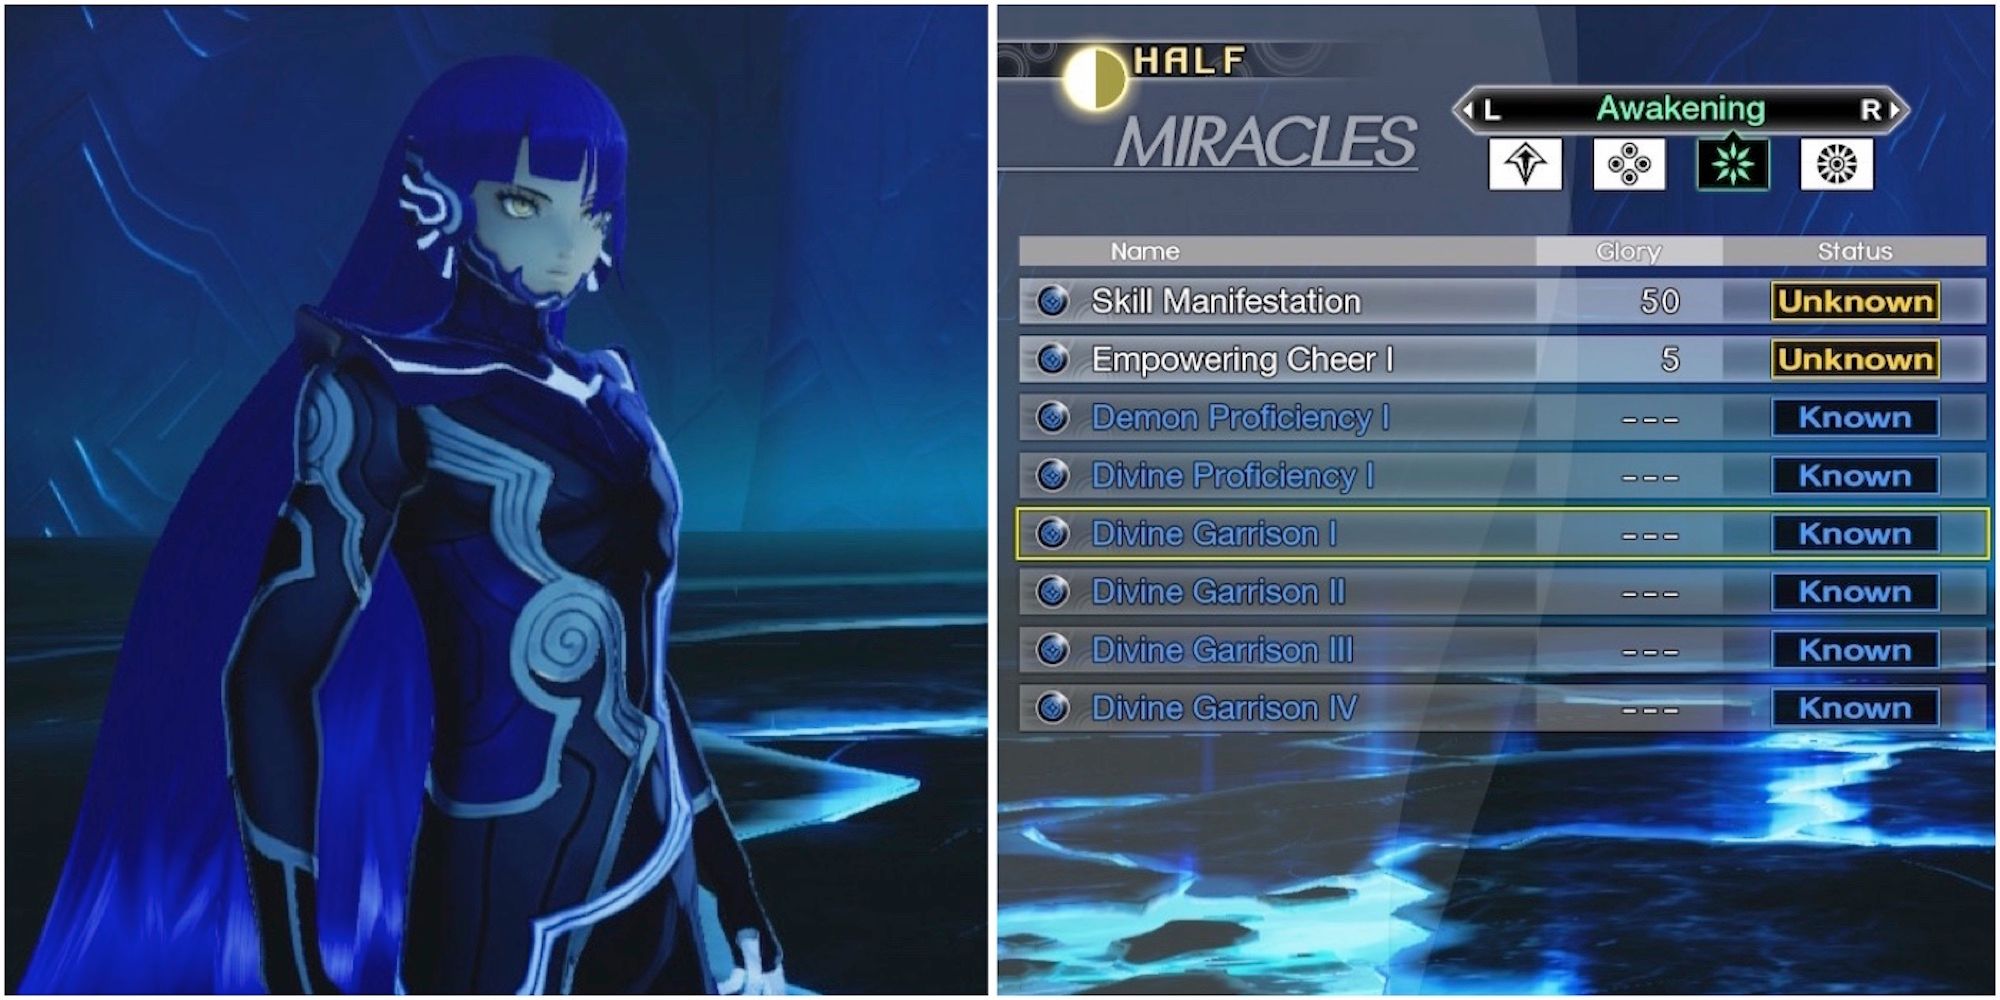 The main character and the Miracles menu from Shin Megami Tensei 5